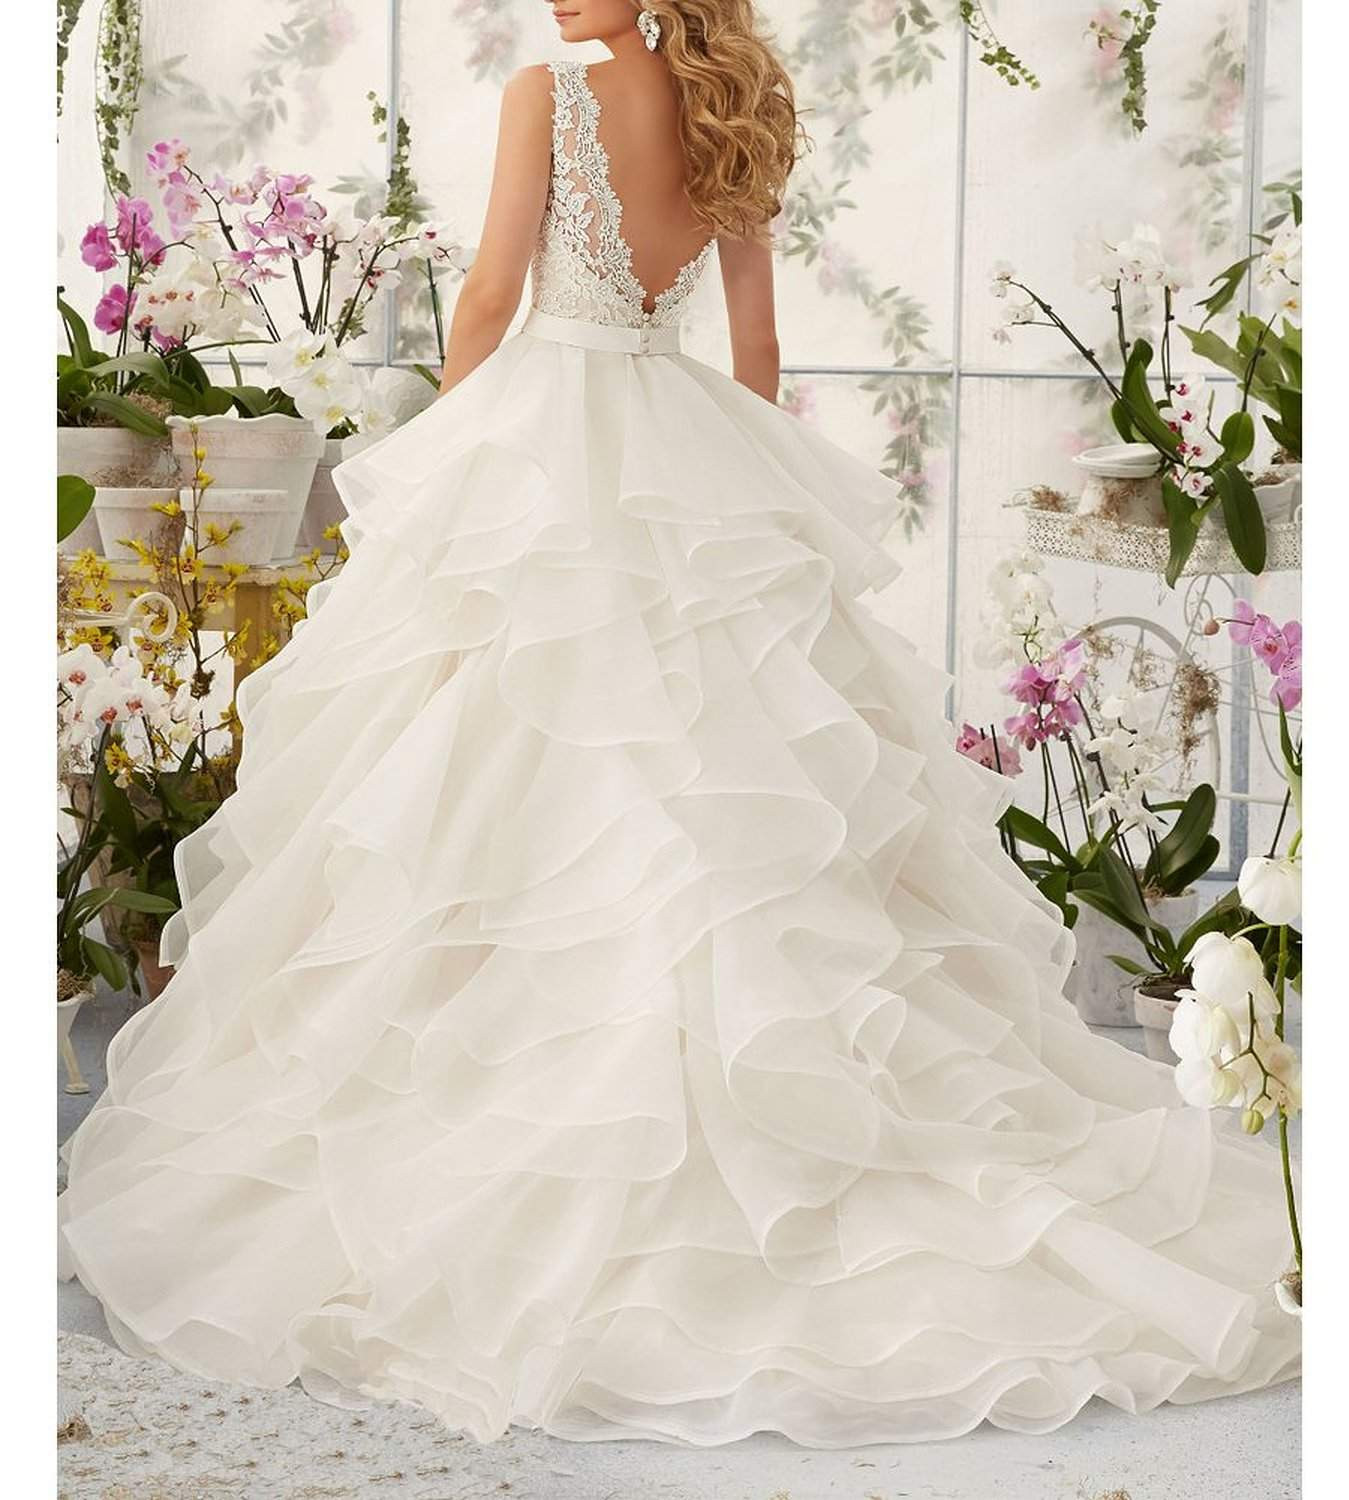 Simple Cheap Wedding Dresses
 Top 50 Best Cheap Wedding Dresses pare Buy & Save